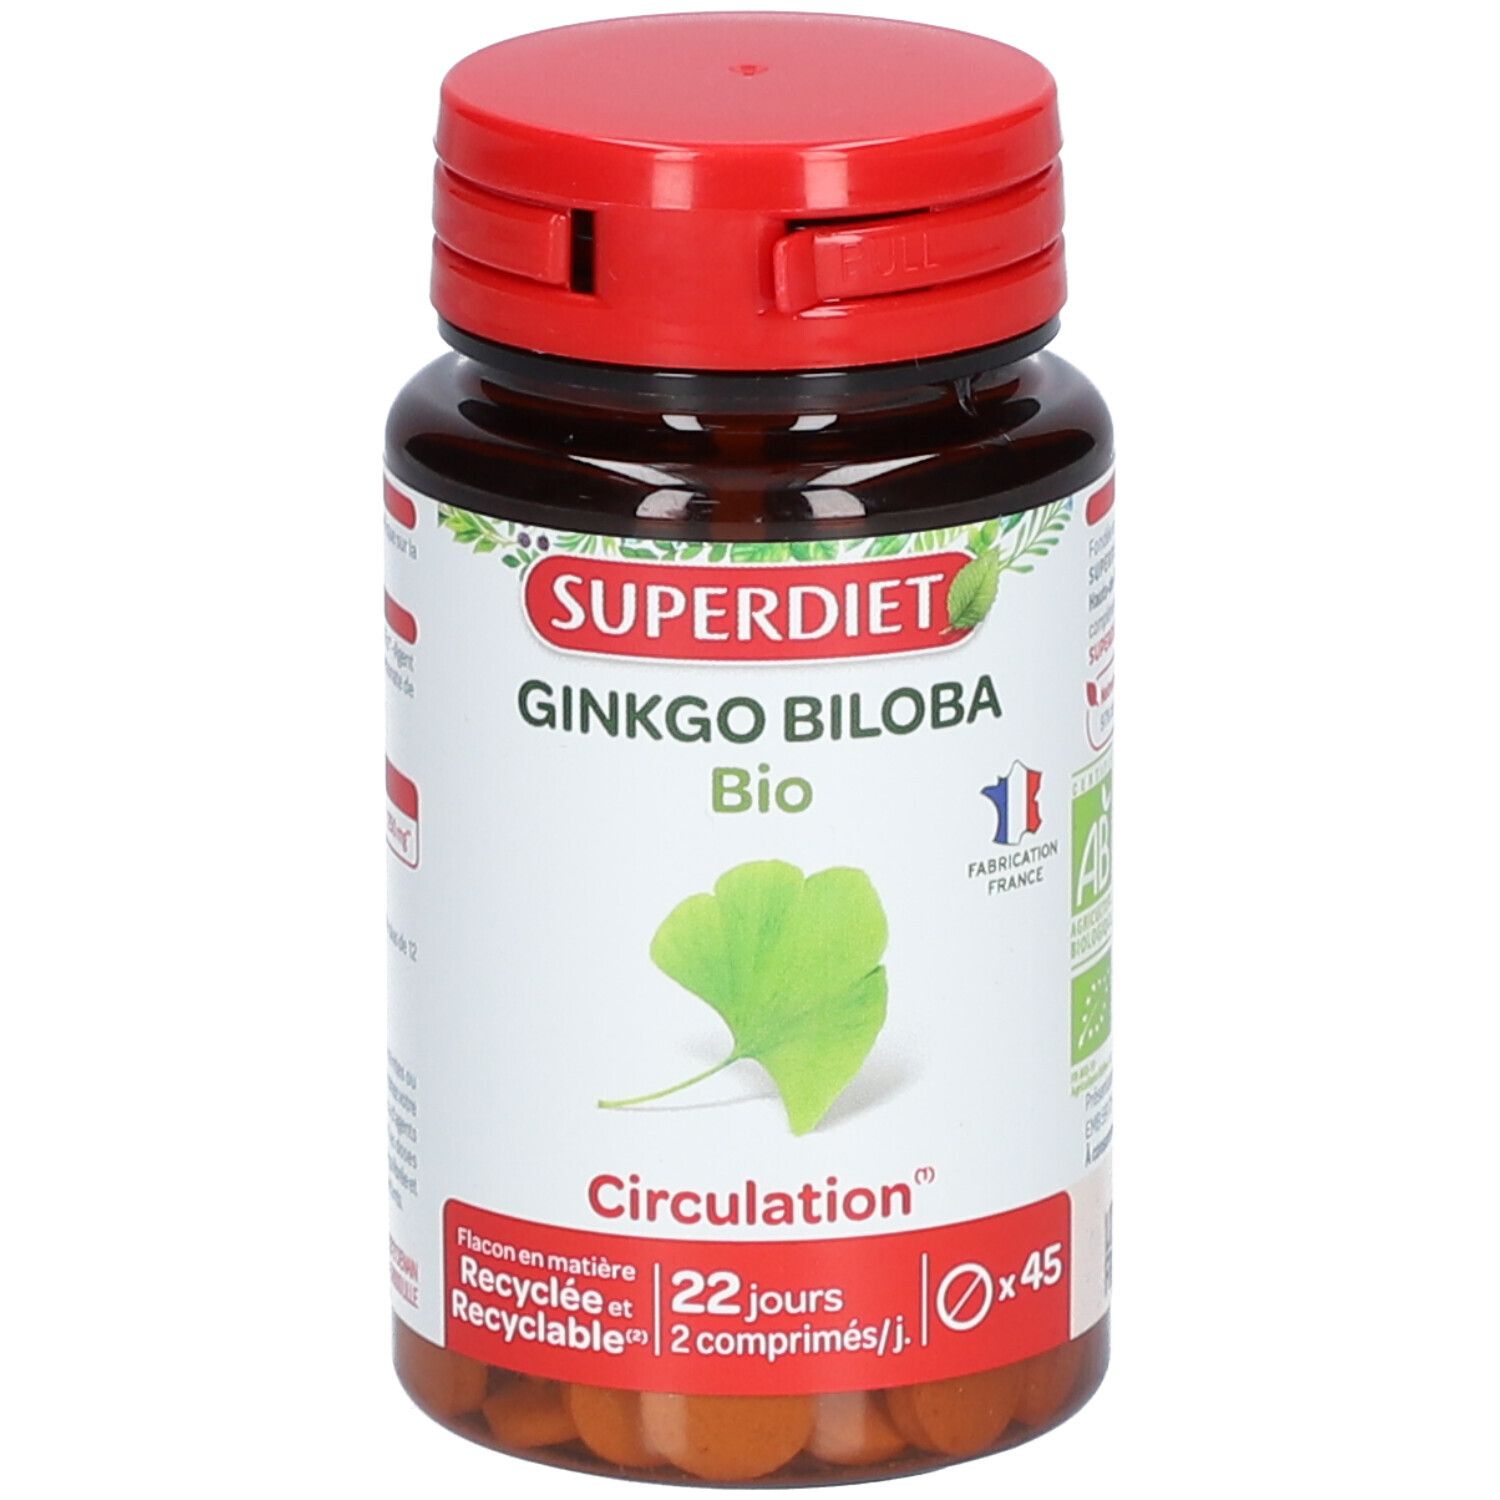 Super Diet Ginkgo Biloba Bio Circulation